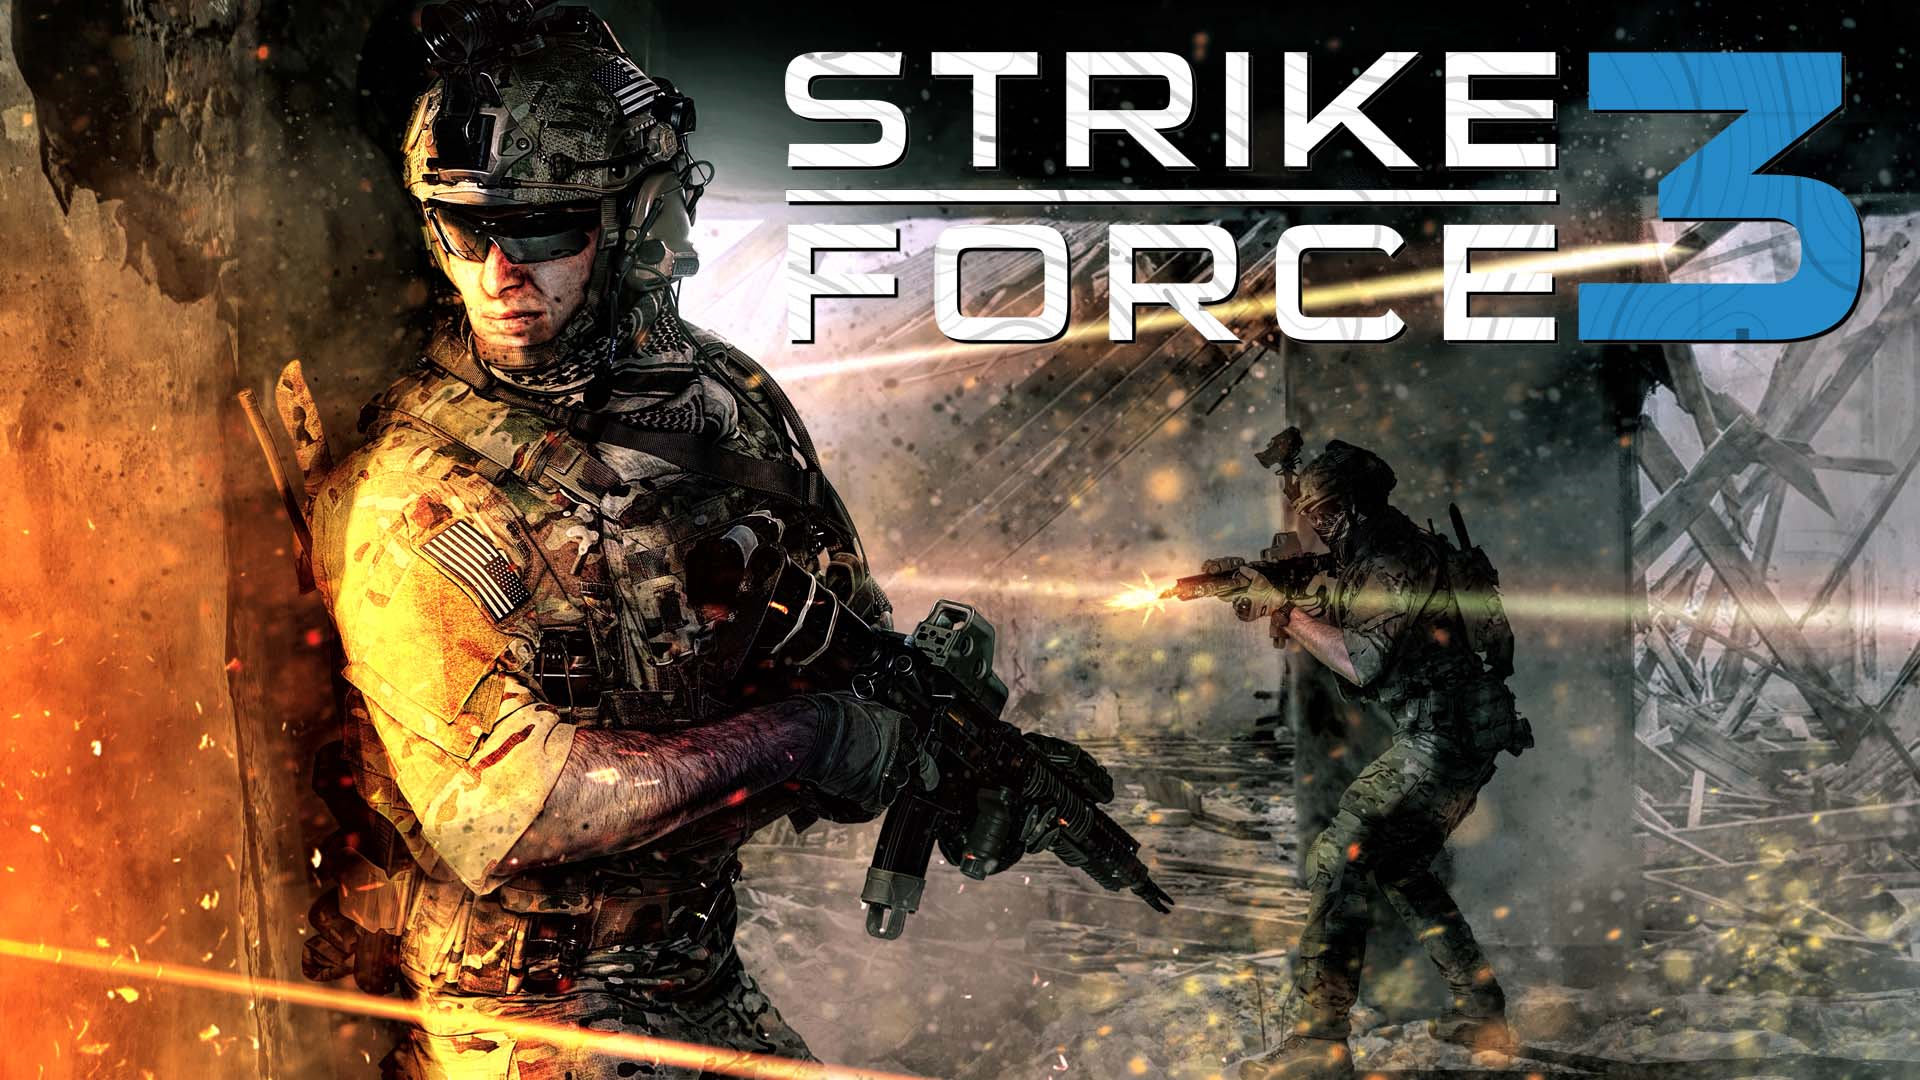 Strike Force 3